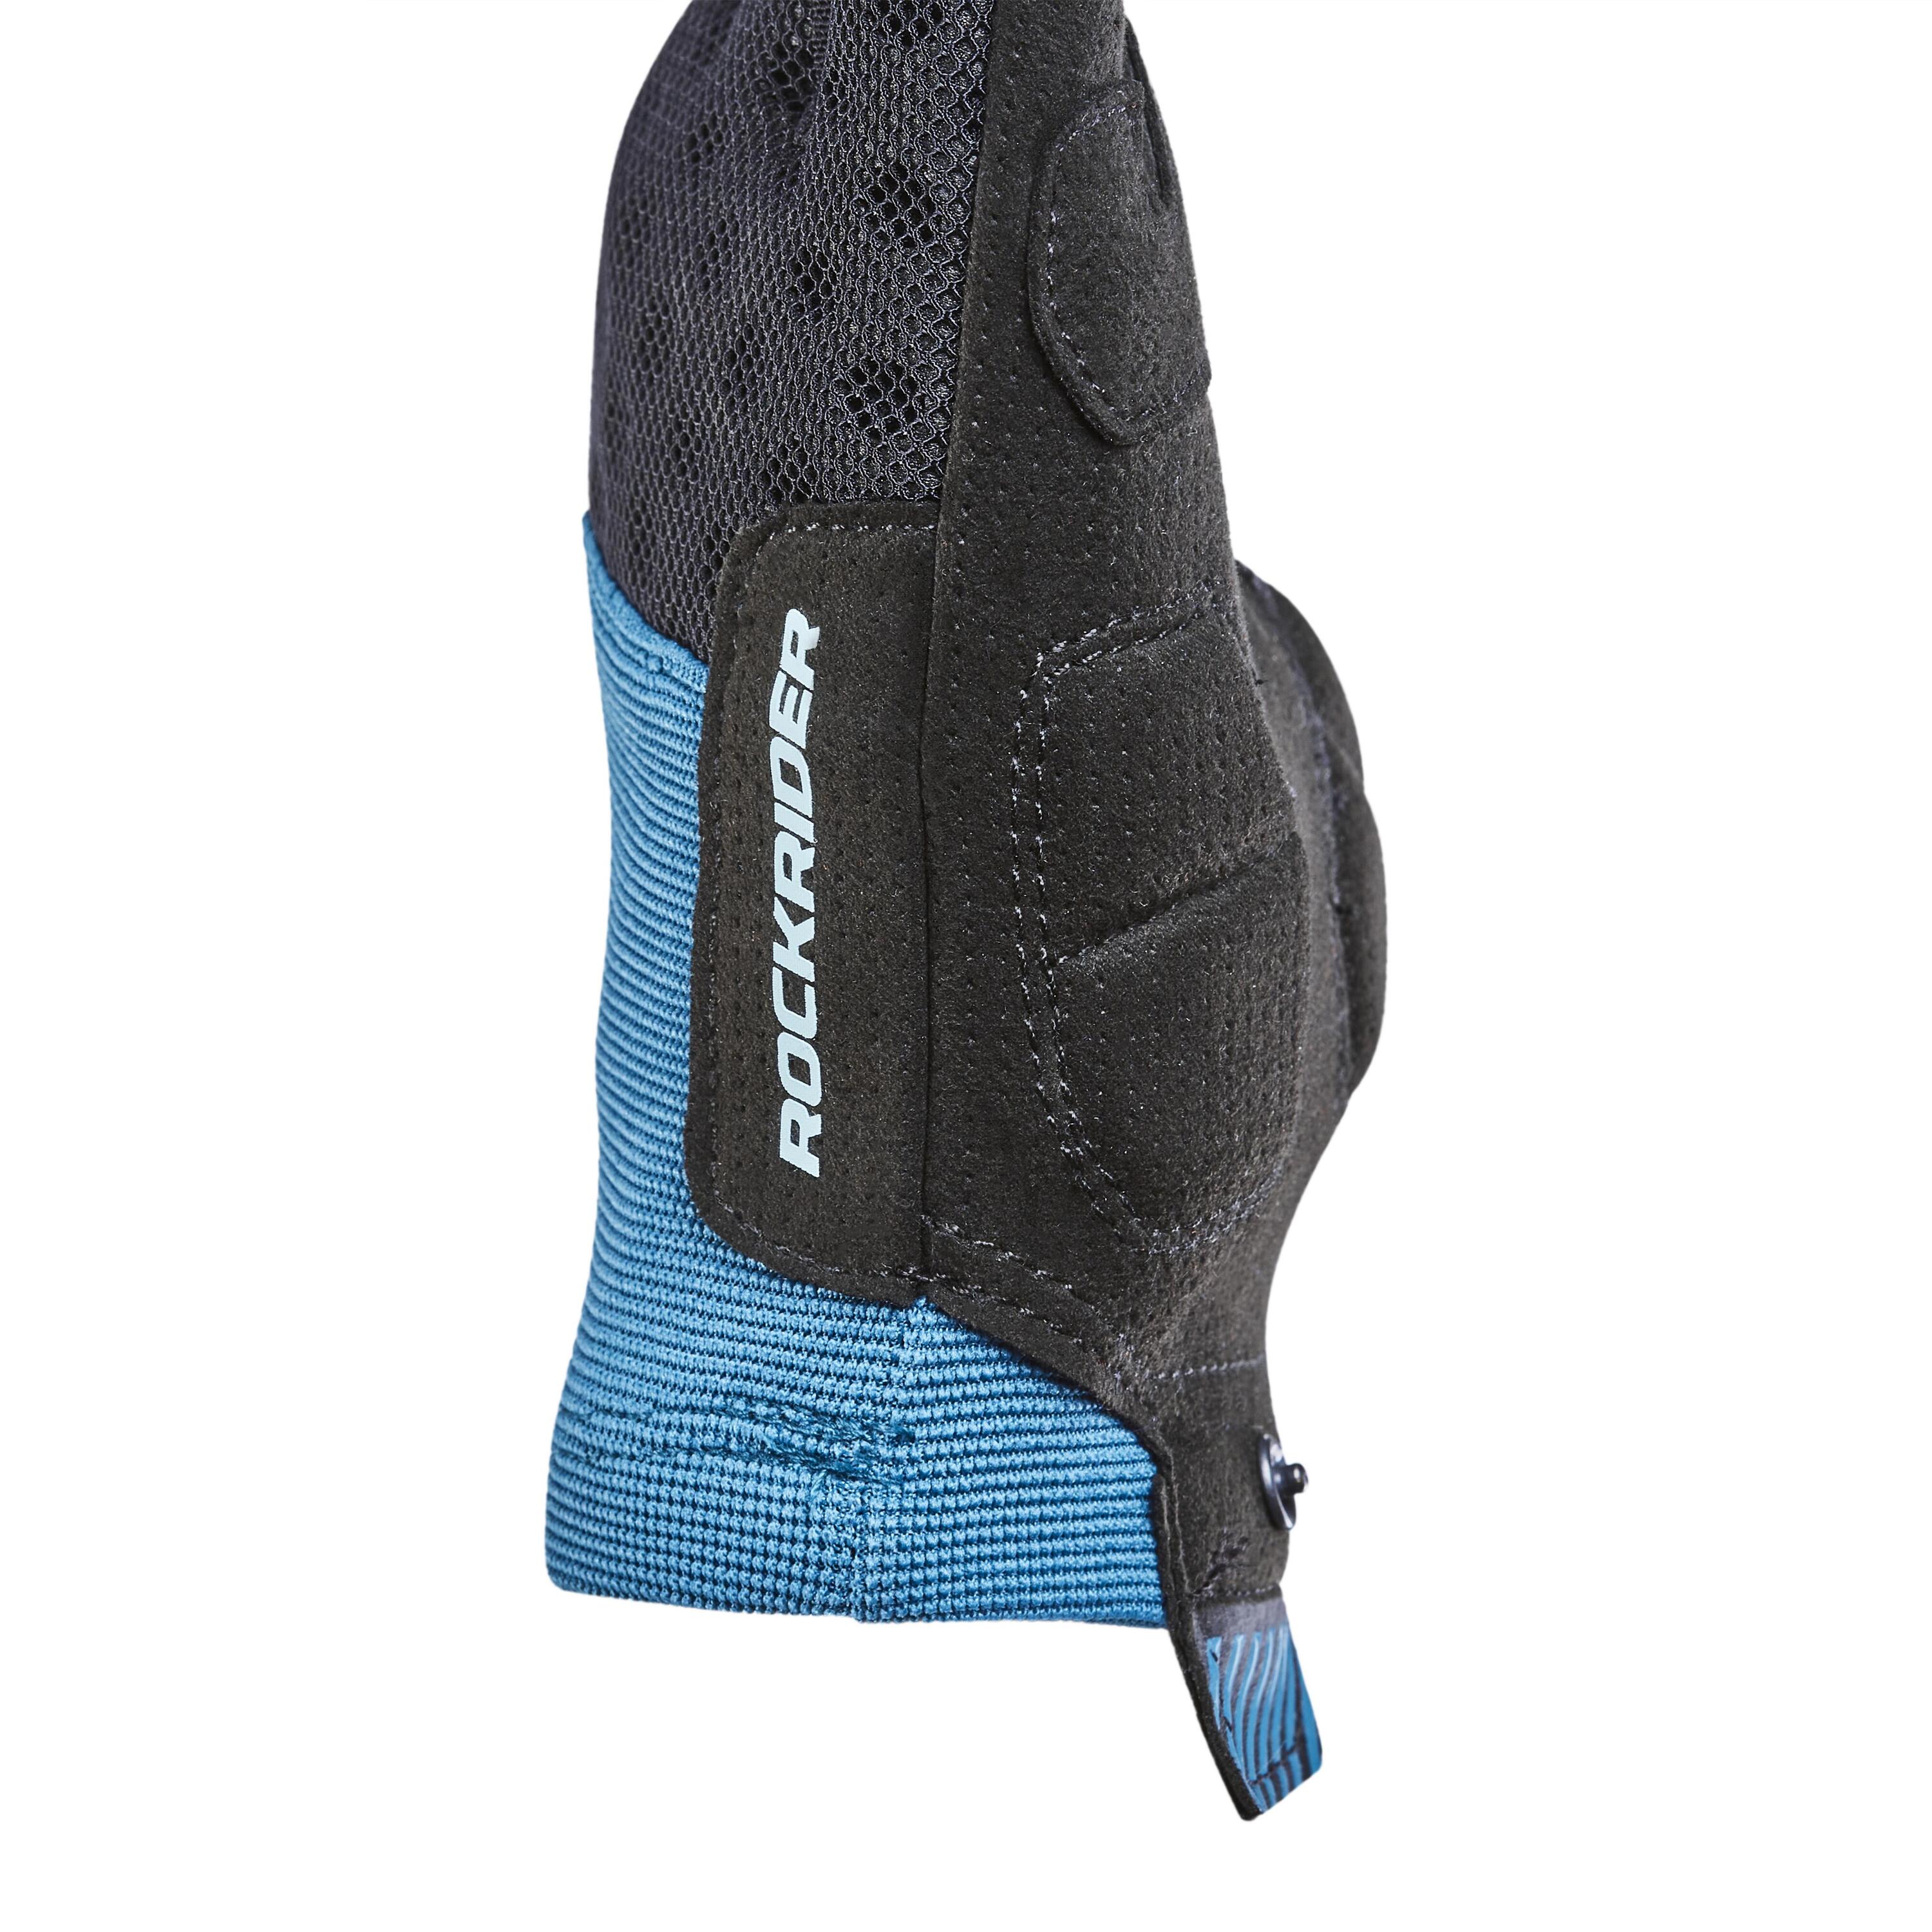 Mountain Biking Gloves ST 500 - Turquoise 4/11